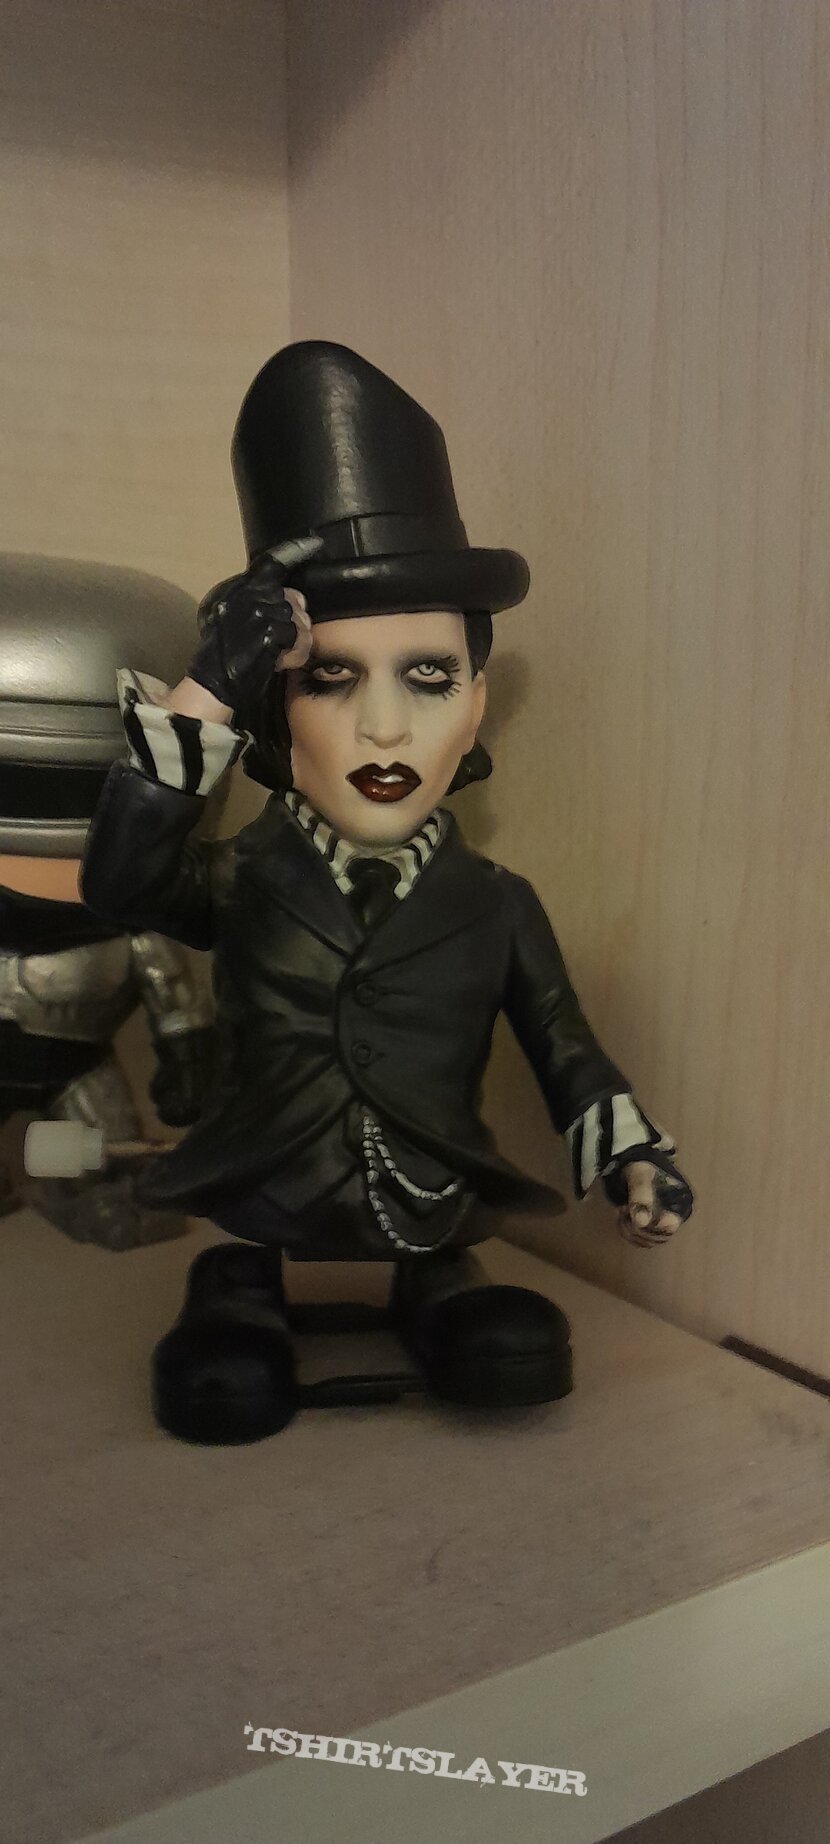 Marilyn Manson Mobscene Wind Up Toy 